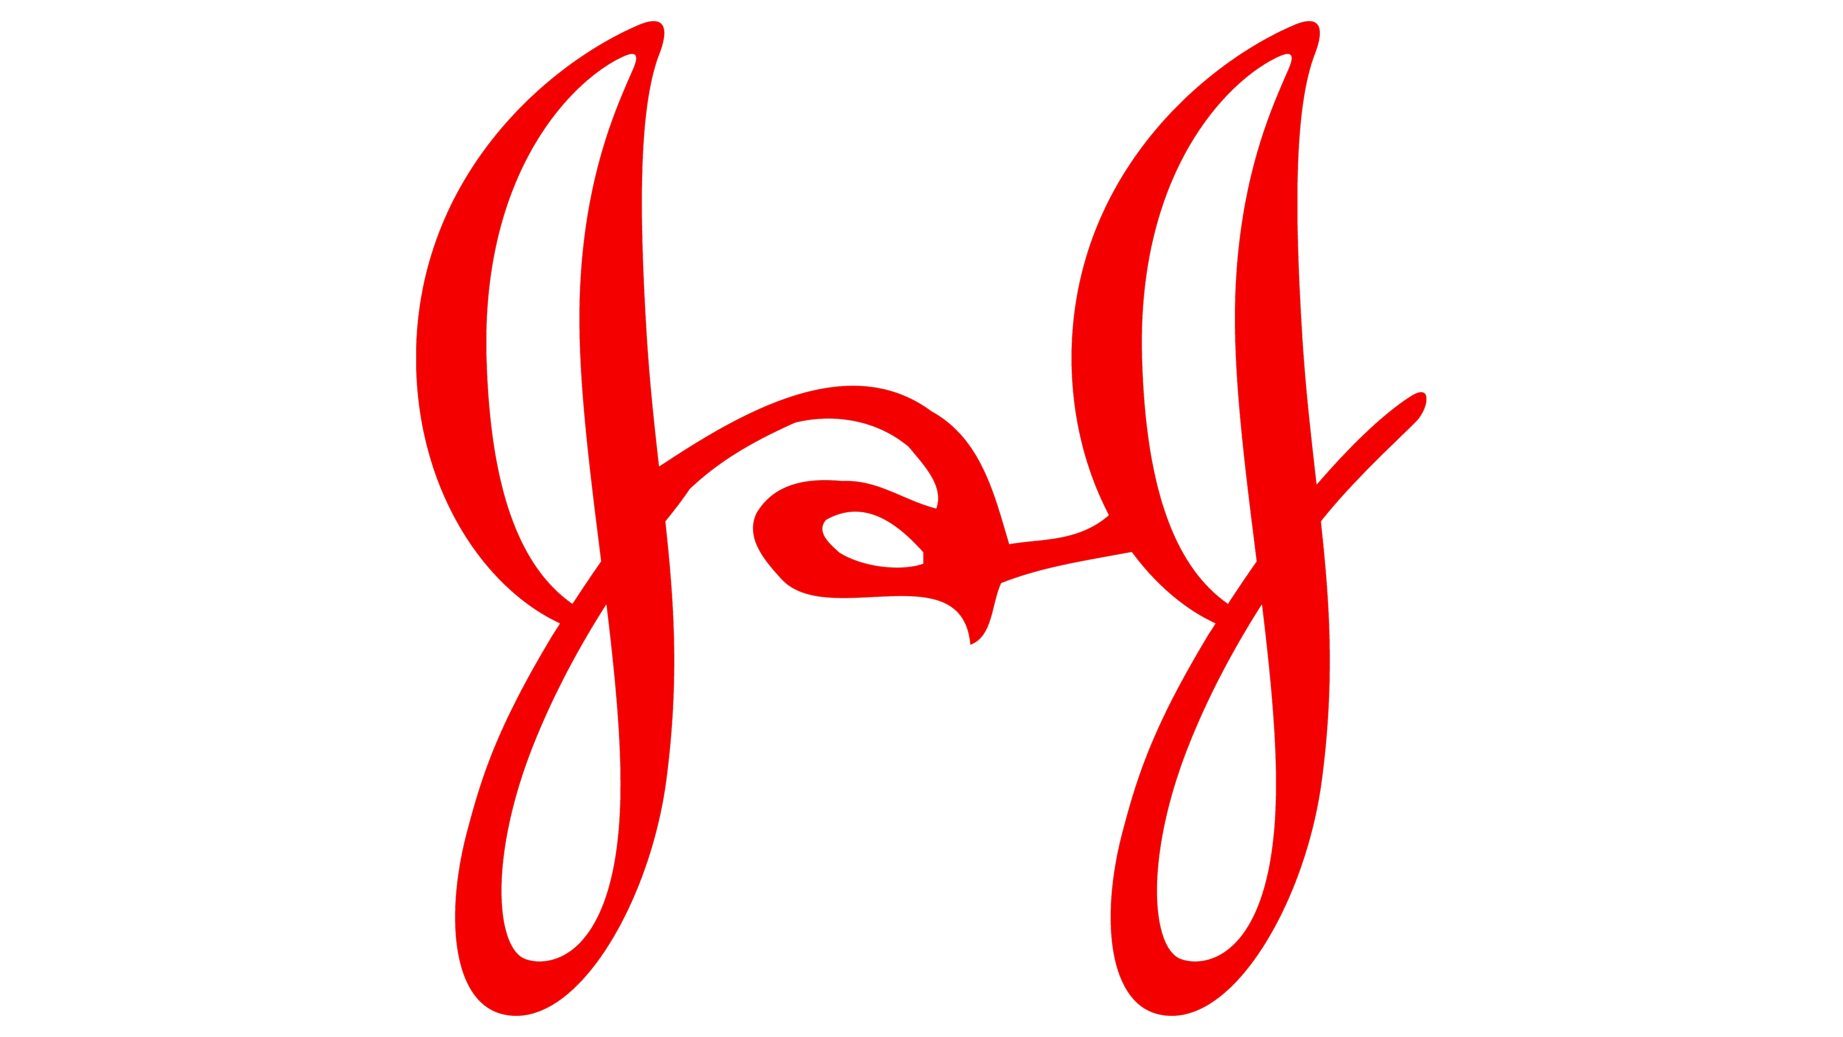 Johnson johnson logo